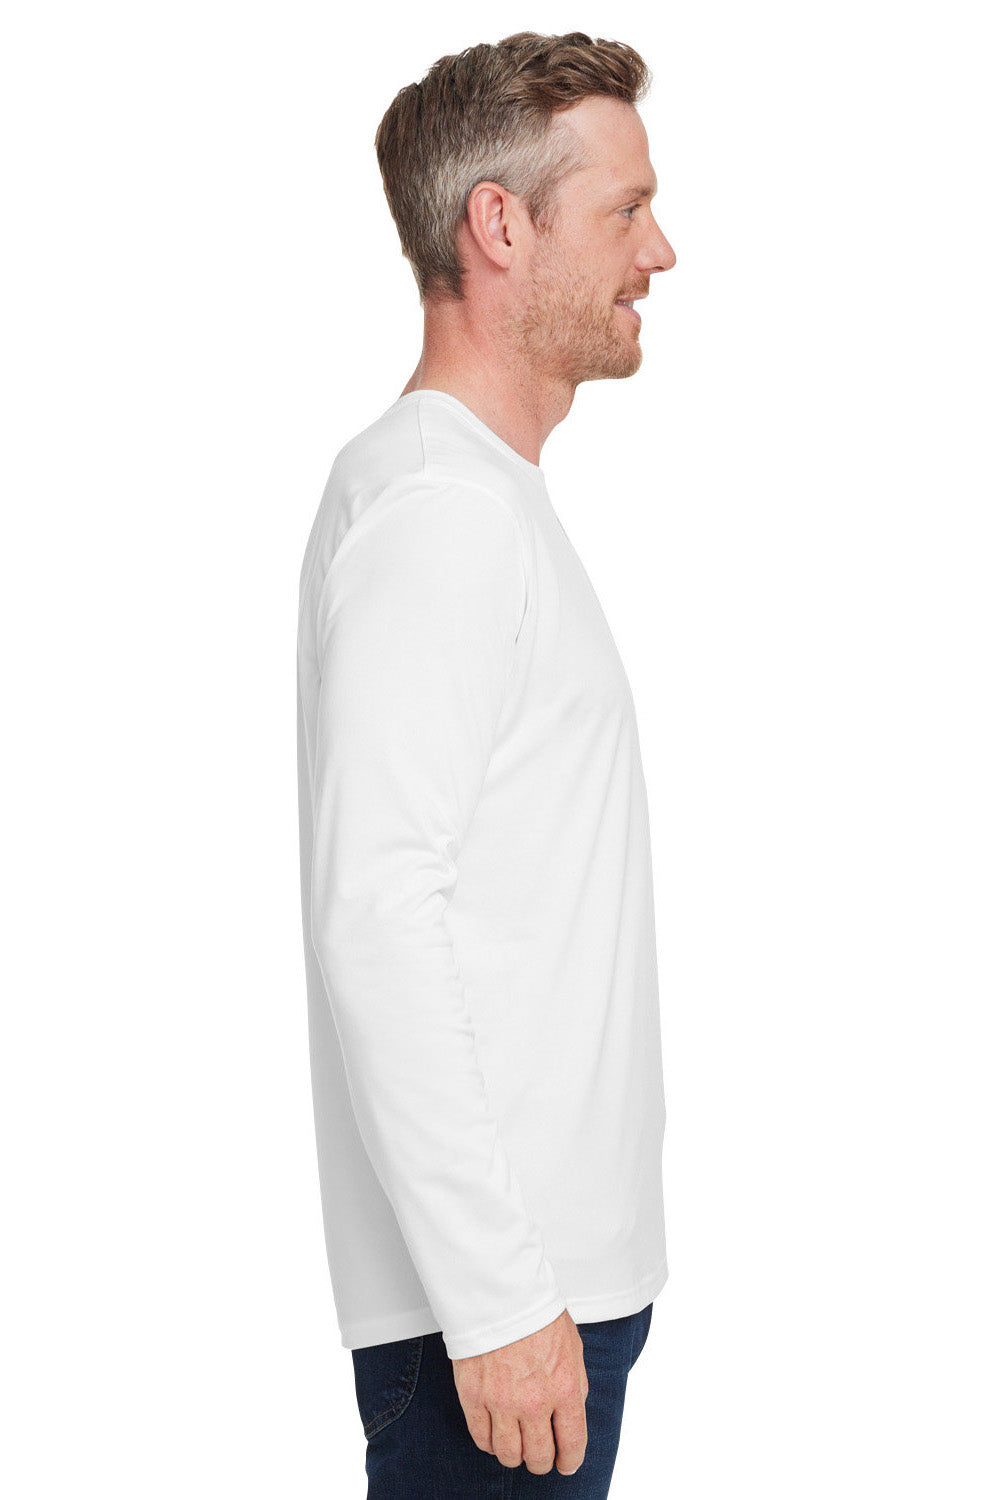 Under Armour 1376843 Mens Team Tech Moisture Wicking Long Sleeve Crewneck T-Shirt White Model Side